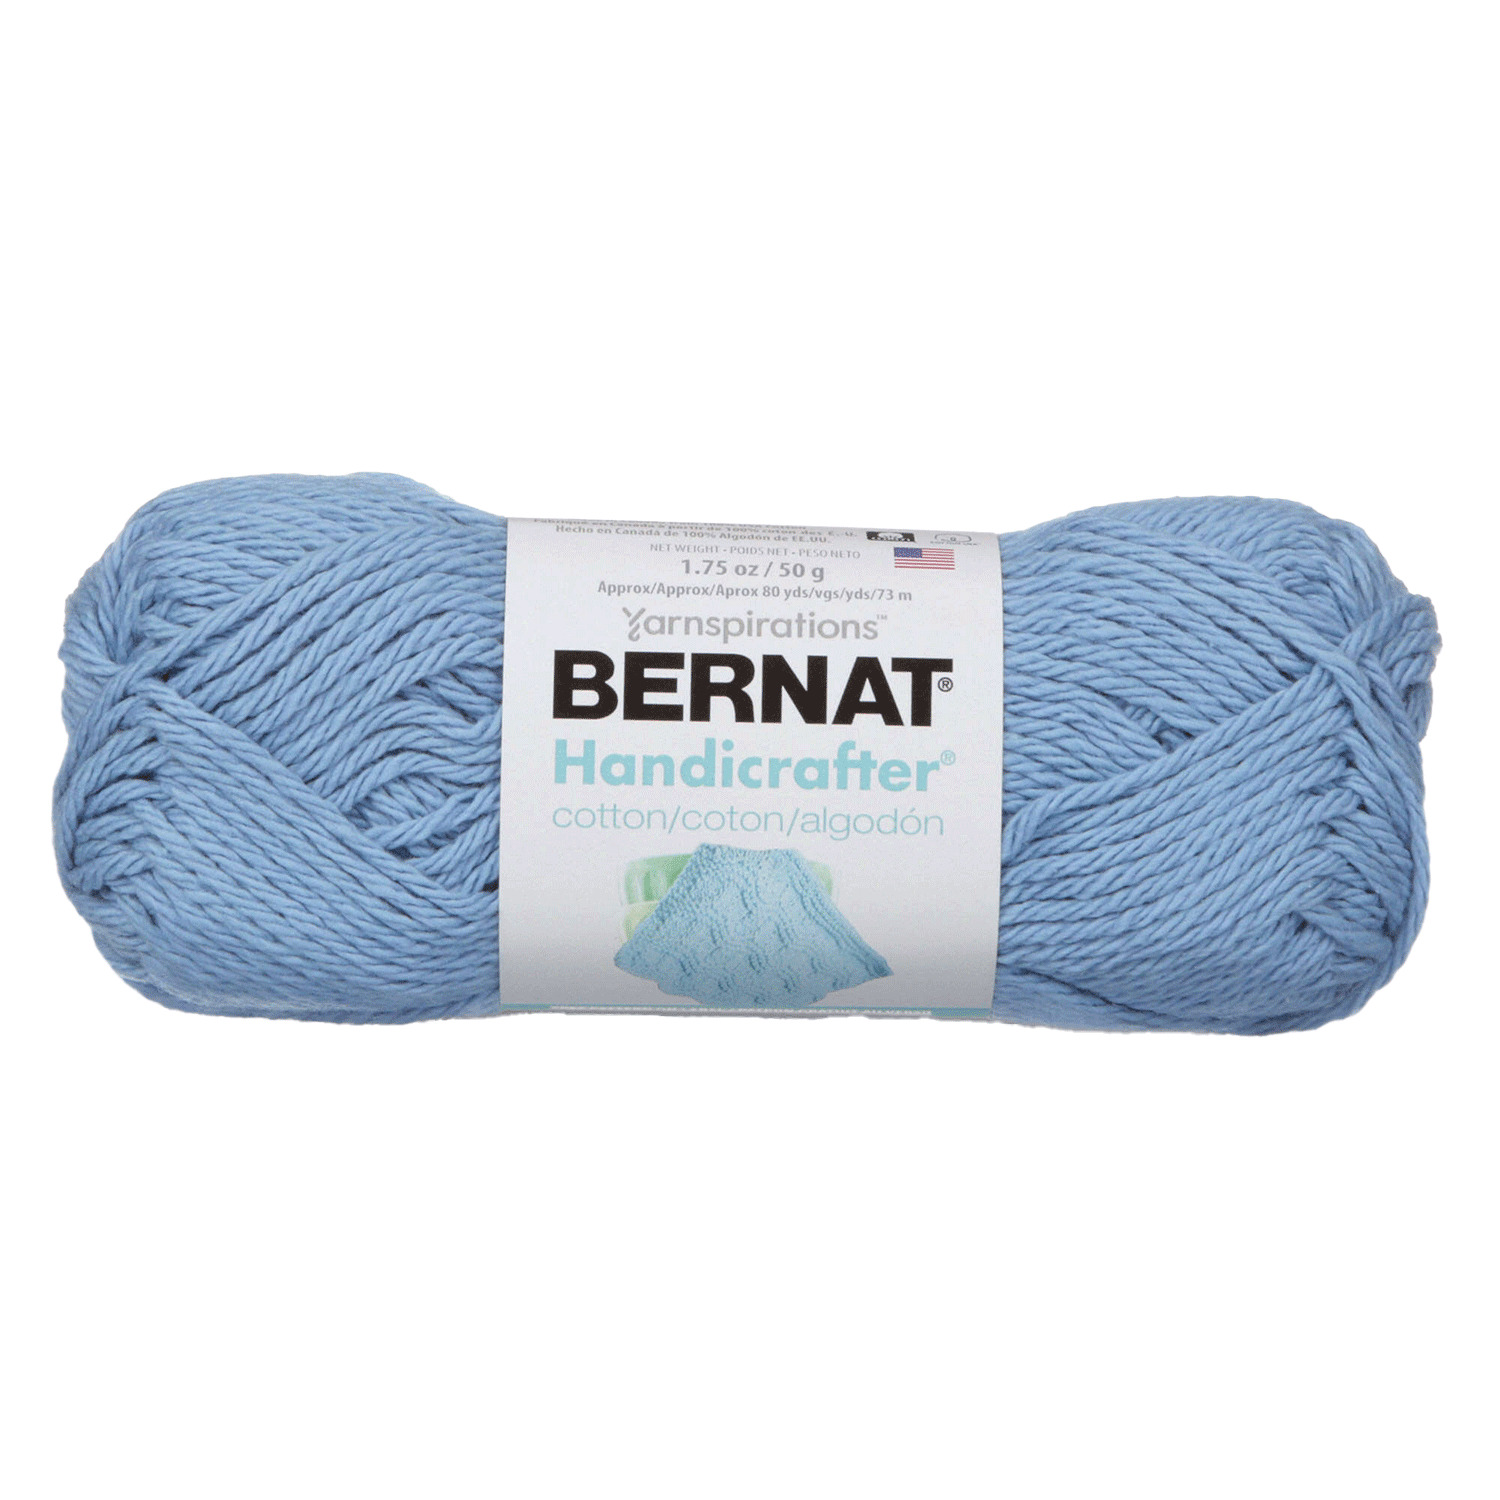 Bernat Handicrafter - Cotton yarn, French blue